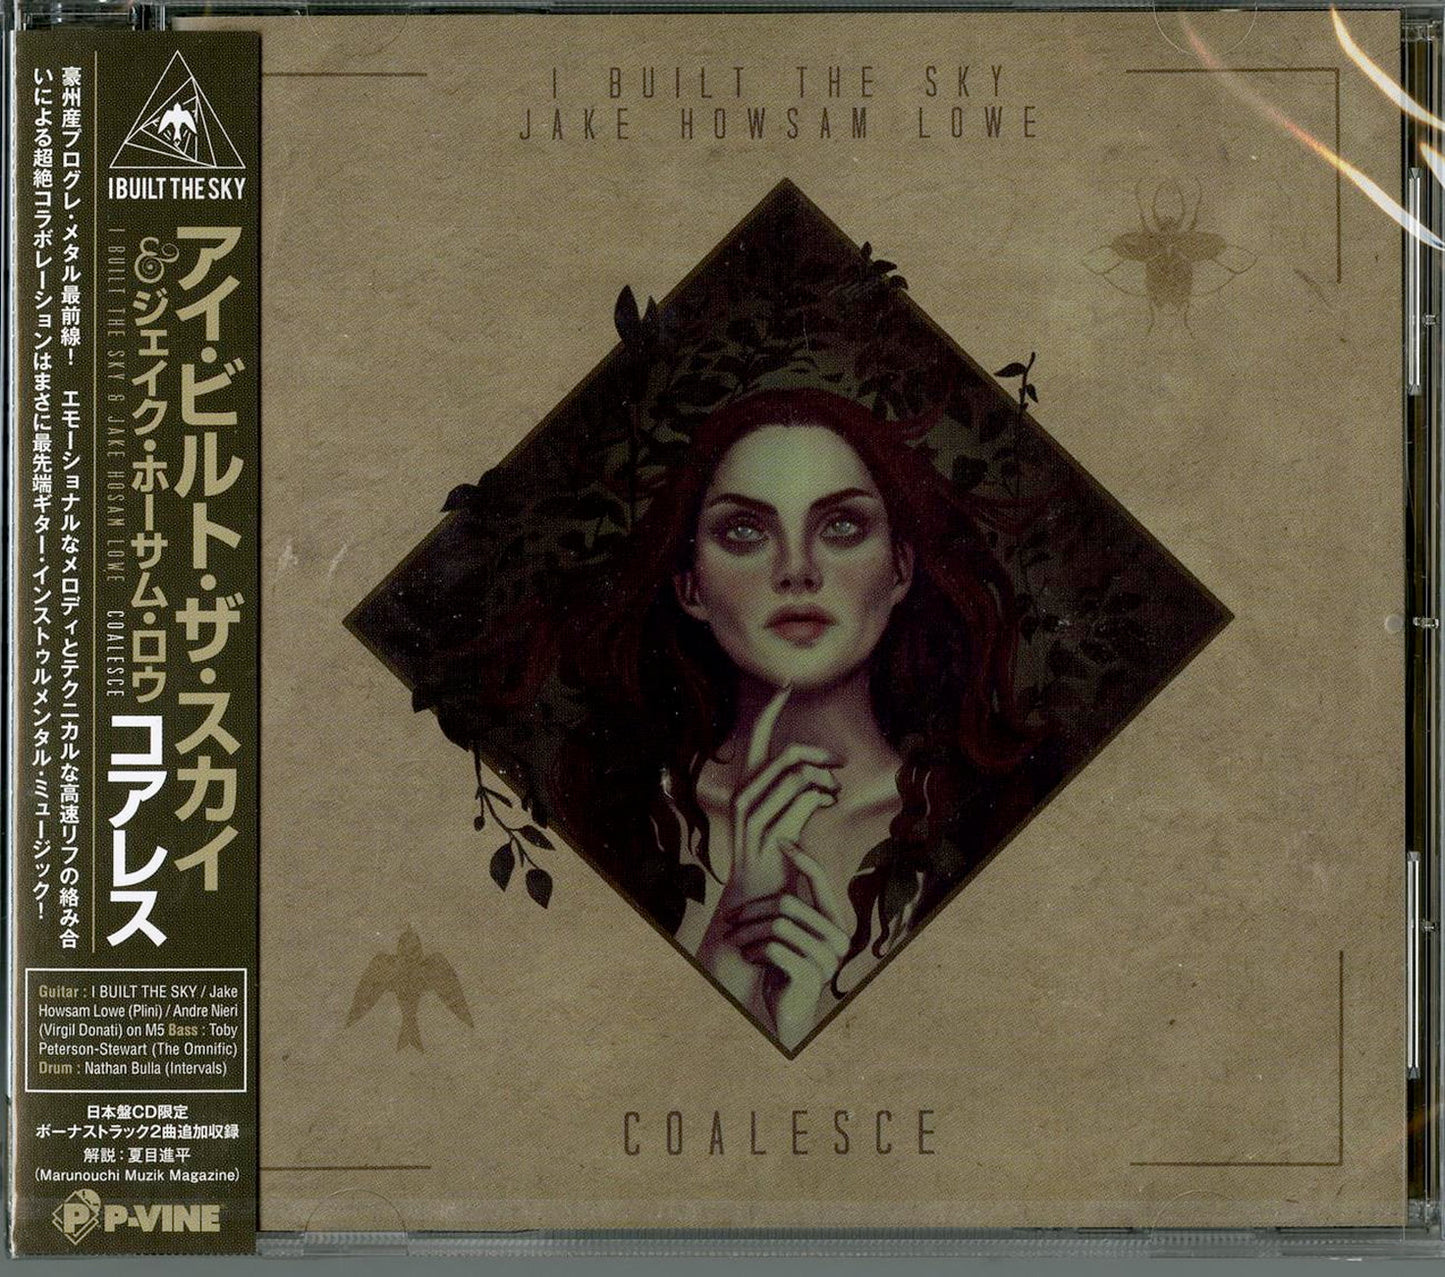 I Built The Sky & Jake Howsam Lowe - Coalesce - Japan  CD Bonus Track